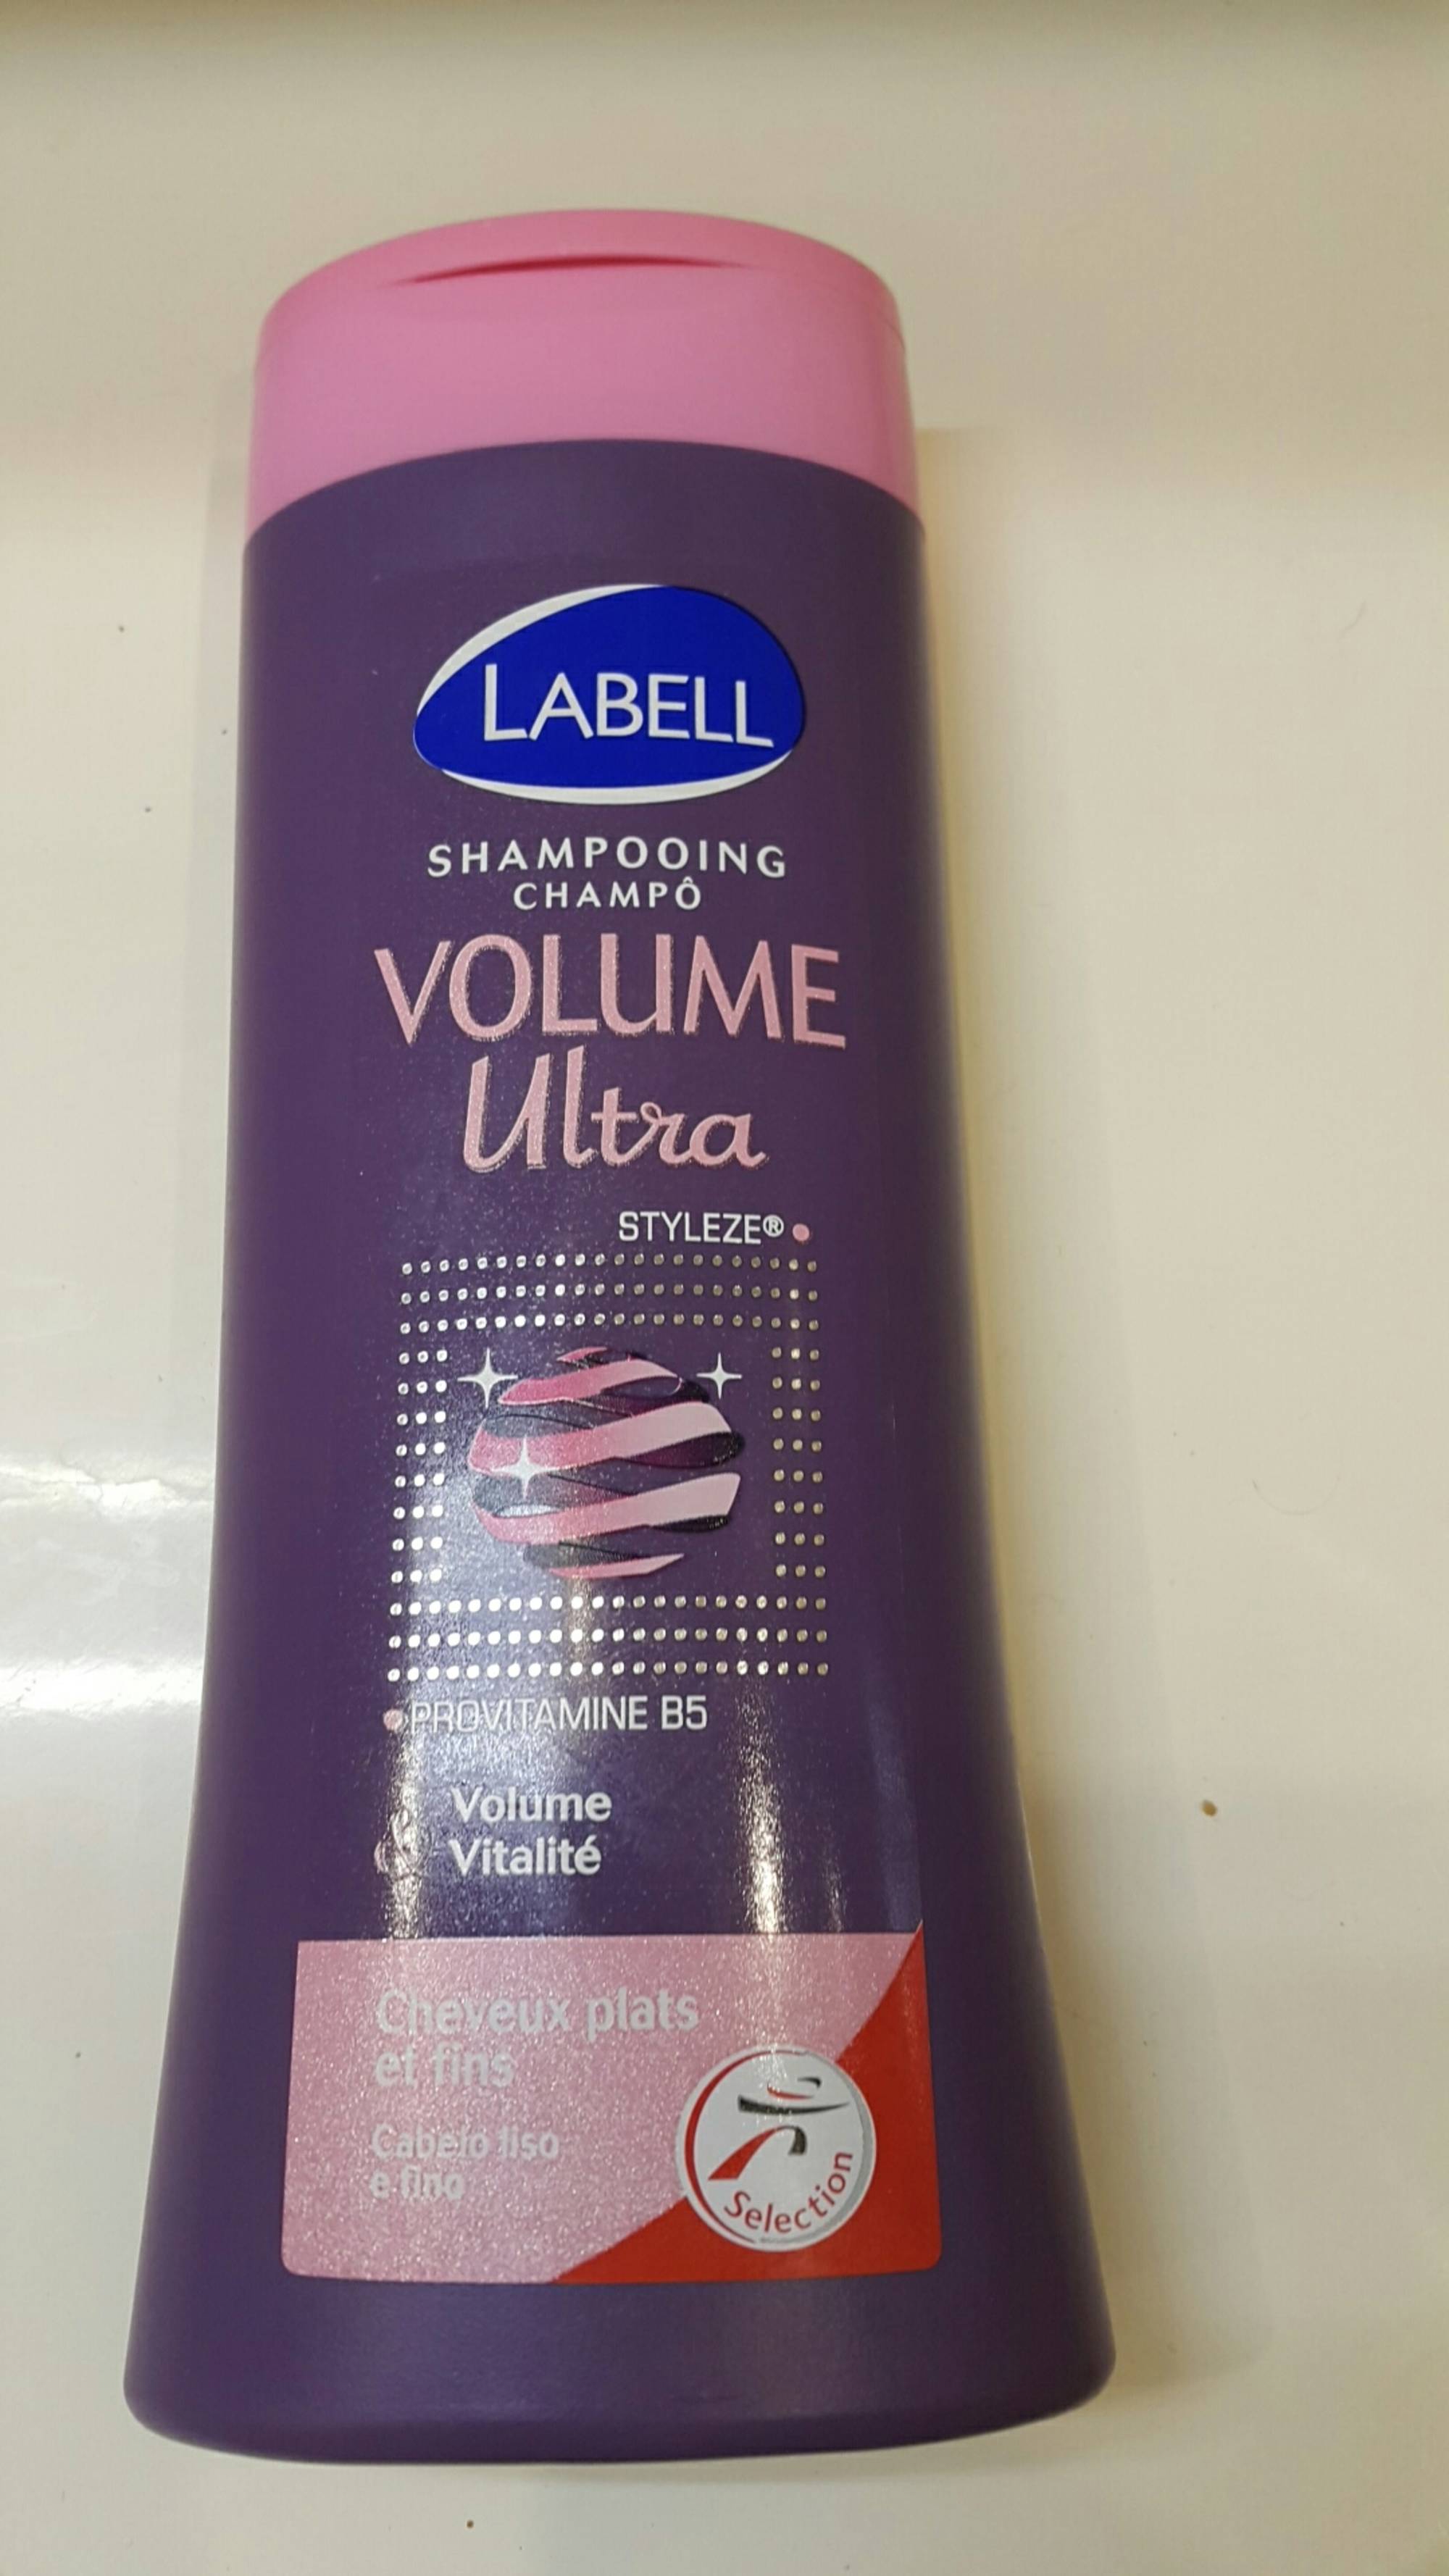 LABELL - Shampooing volume ultra - Cheveux plast et fins